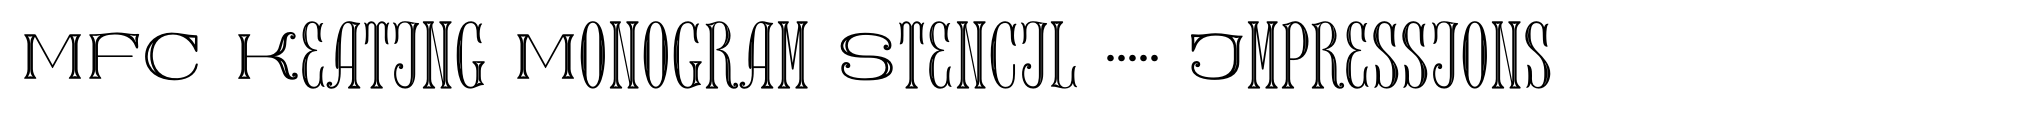 MFC Keating Monogram Stencil 10000 Impressions image